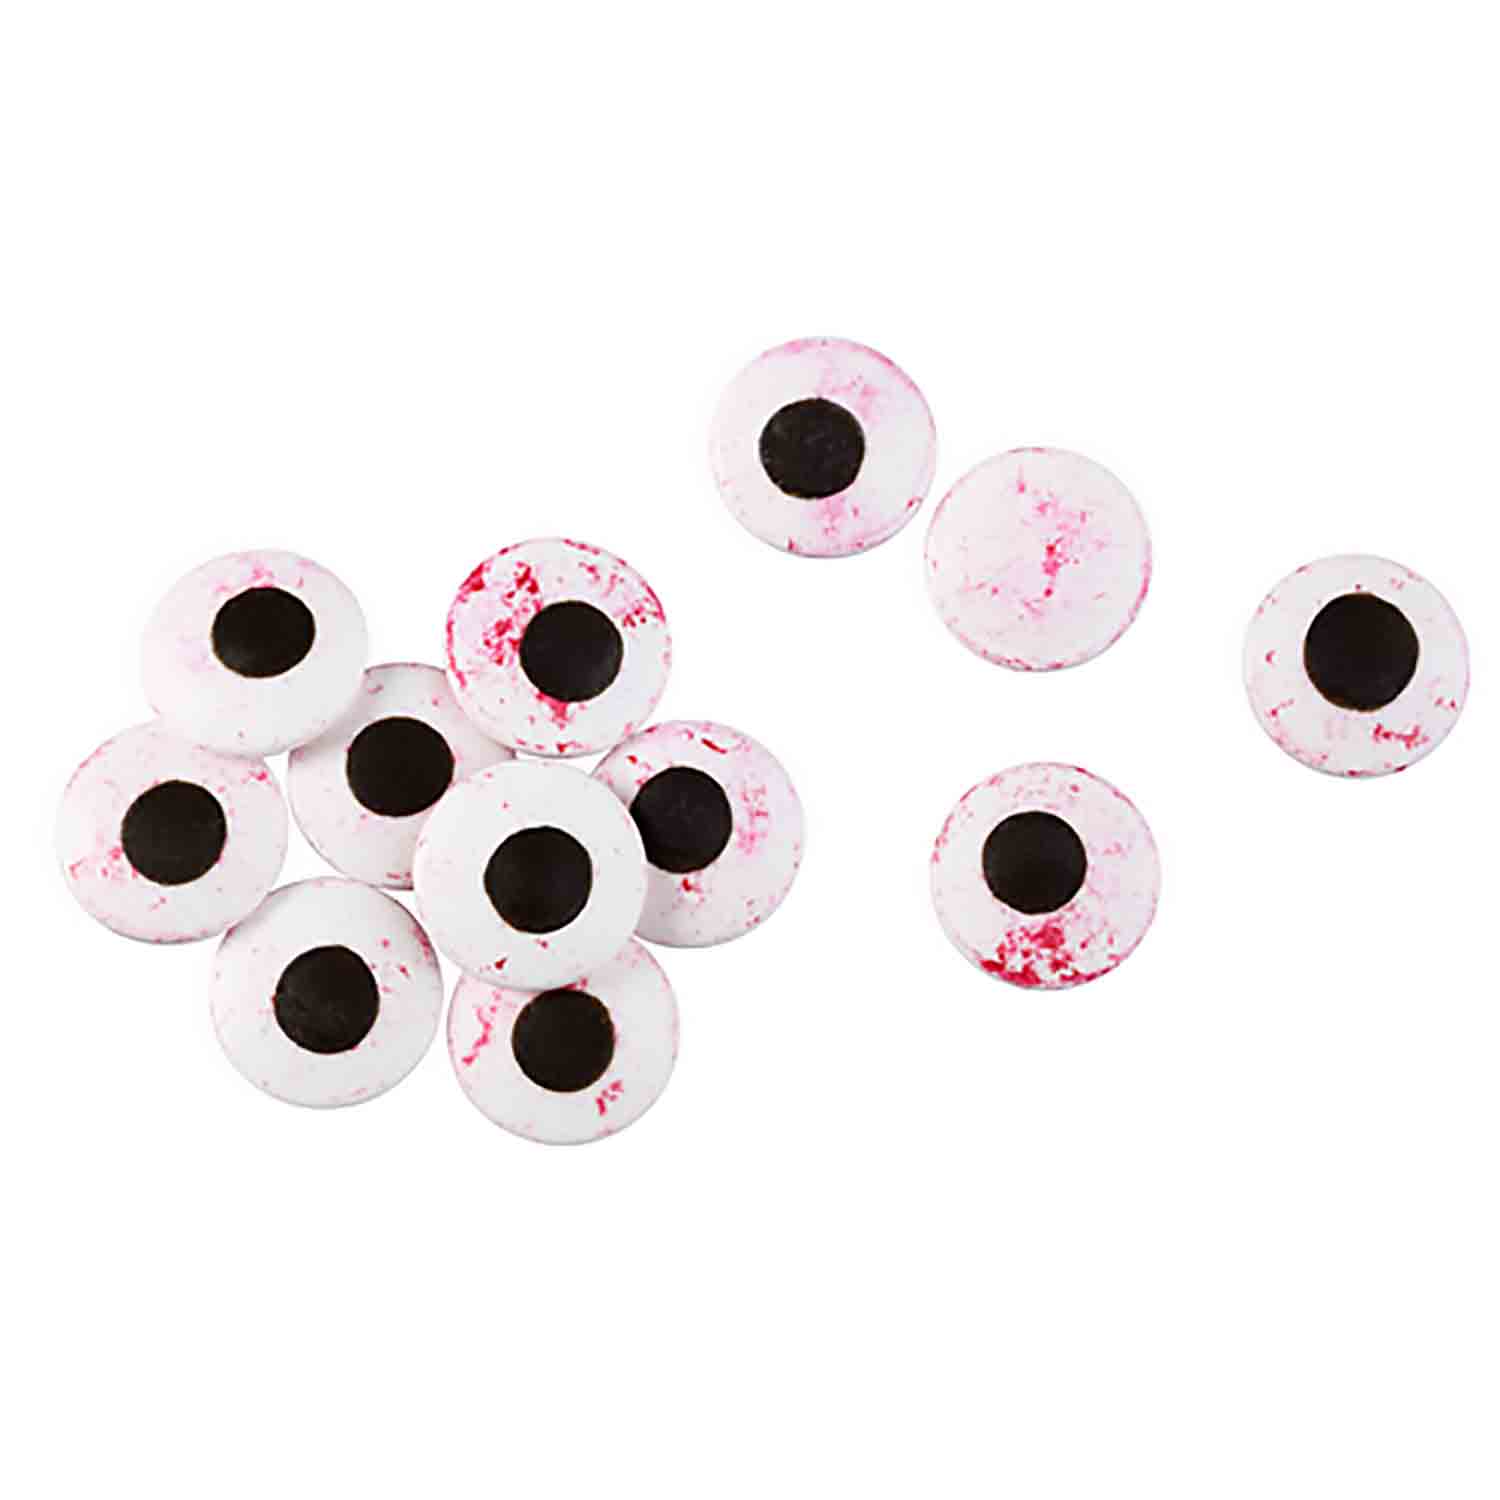 Wilton Red Vein Eyeballs Candy - 24 count, 1 oz packet